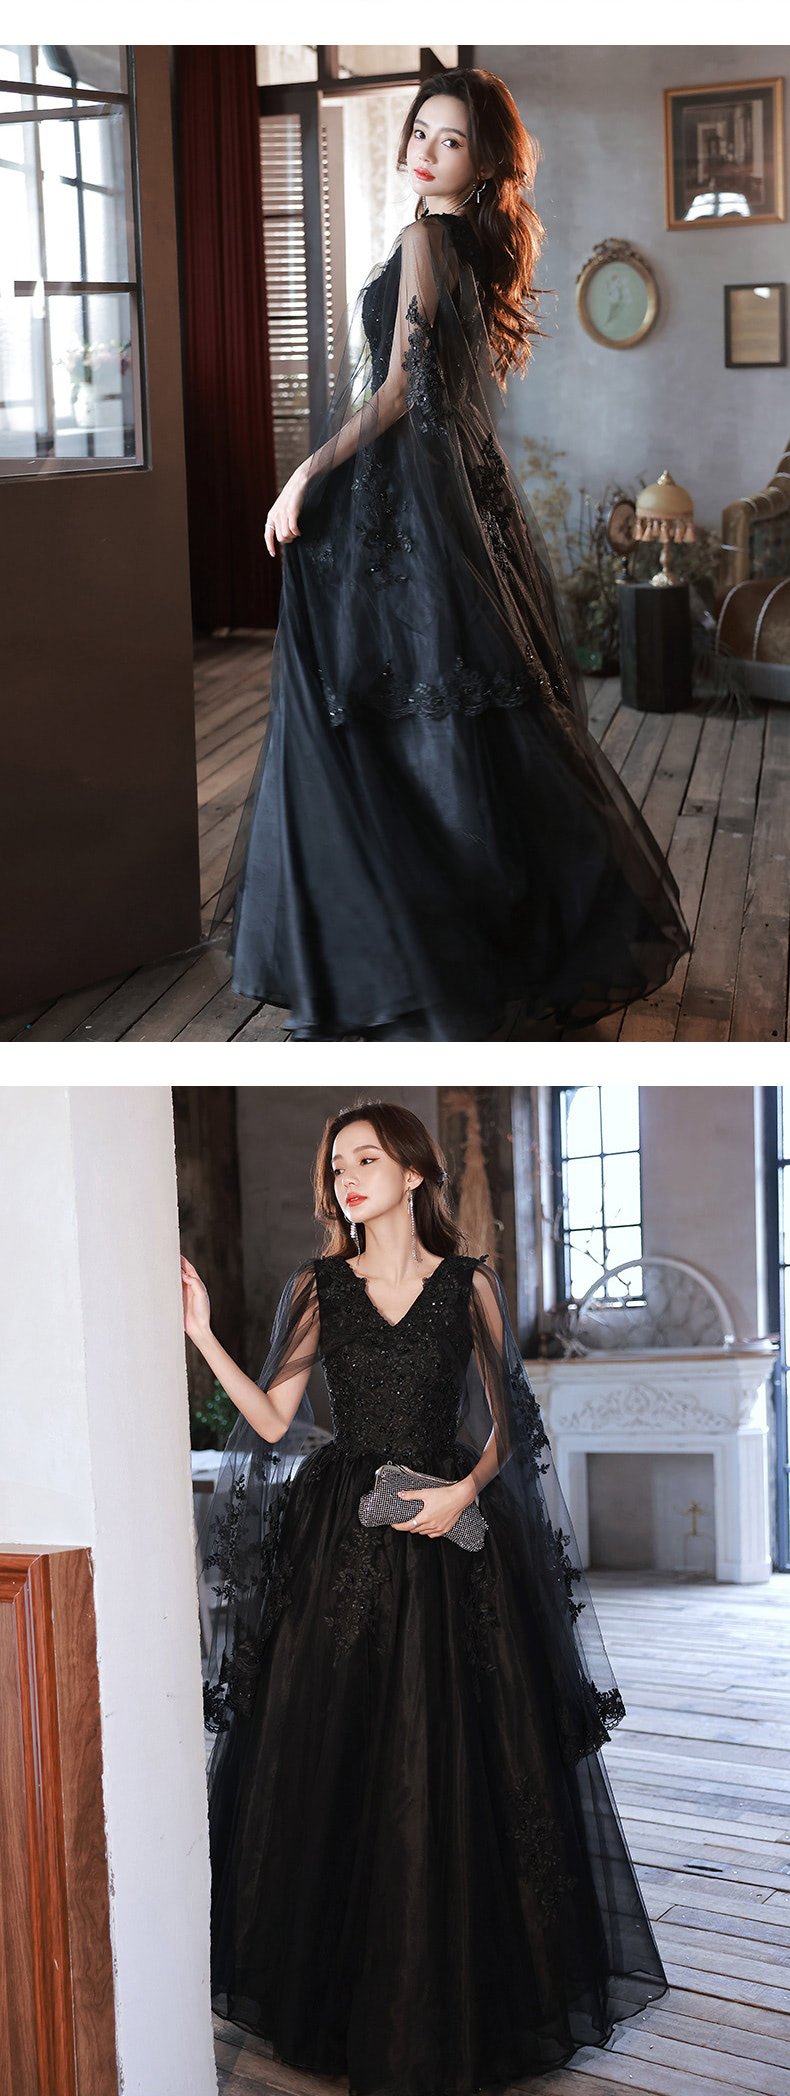 Luxury-Black-Tulle-Sleeve-Wedding-Evening-Formal-Long-Maxi-Dress14